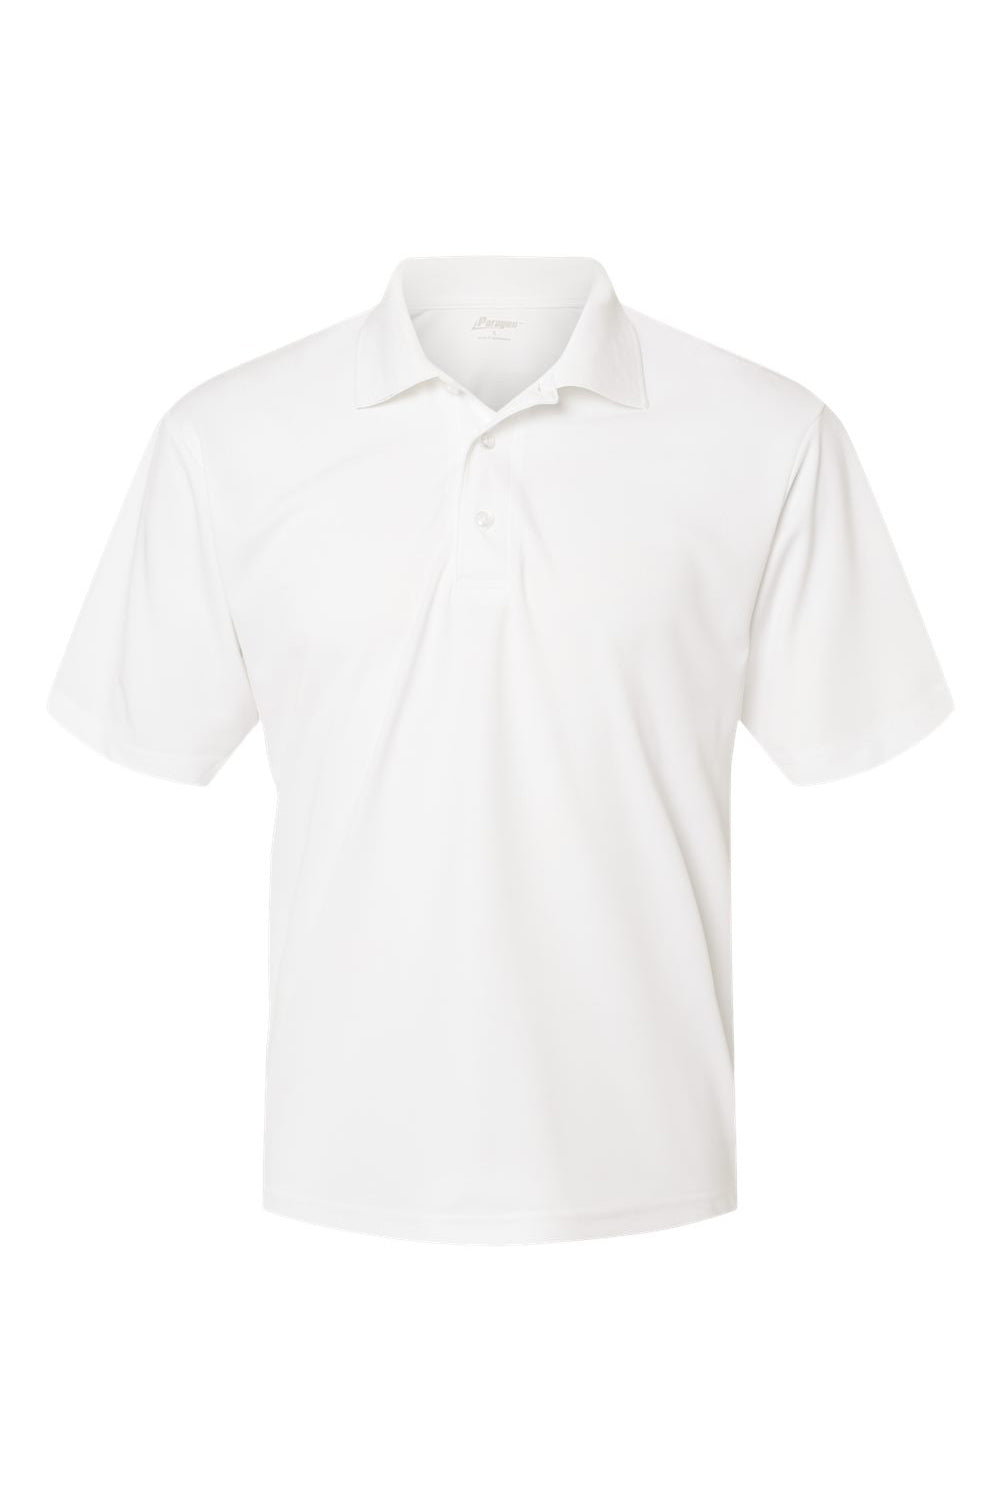 Paragon 500 Mens Sebring Performance Short Sleeve Polo Shirt White Flat Front